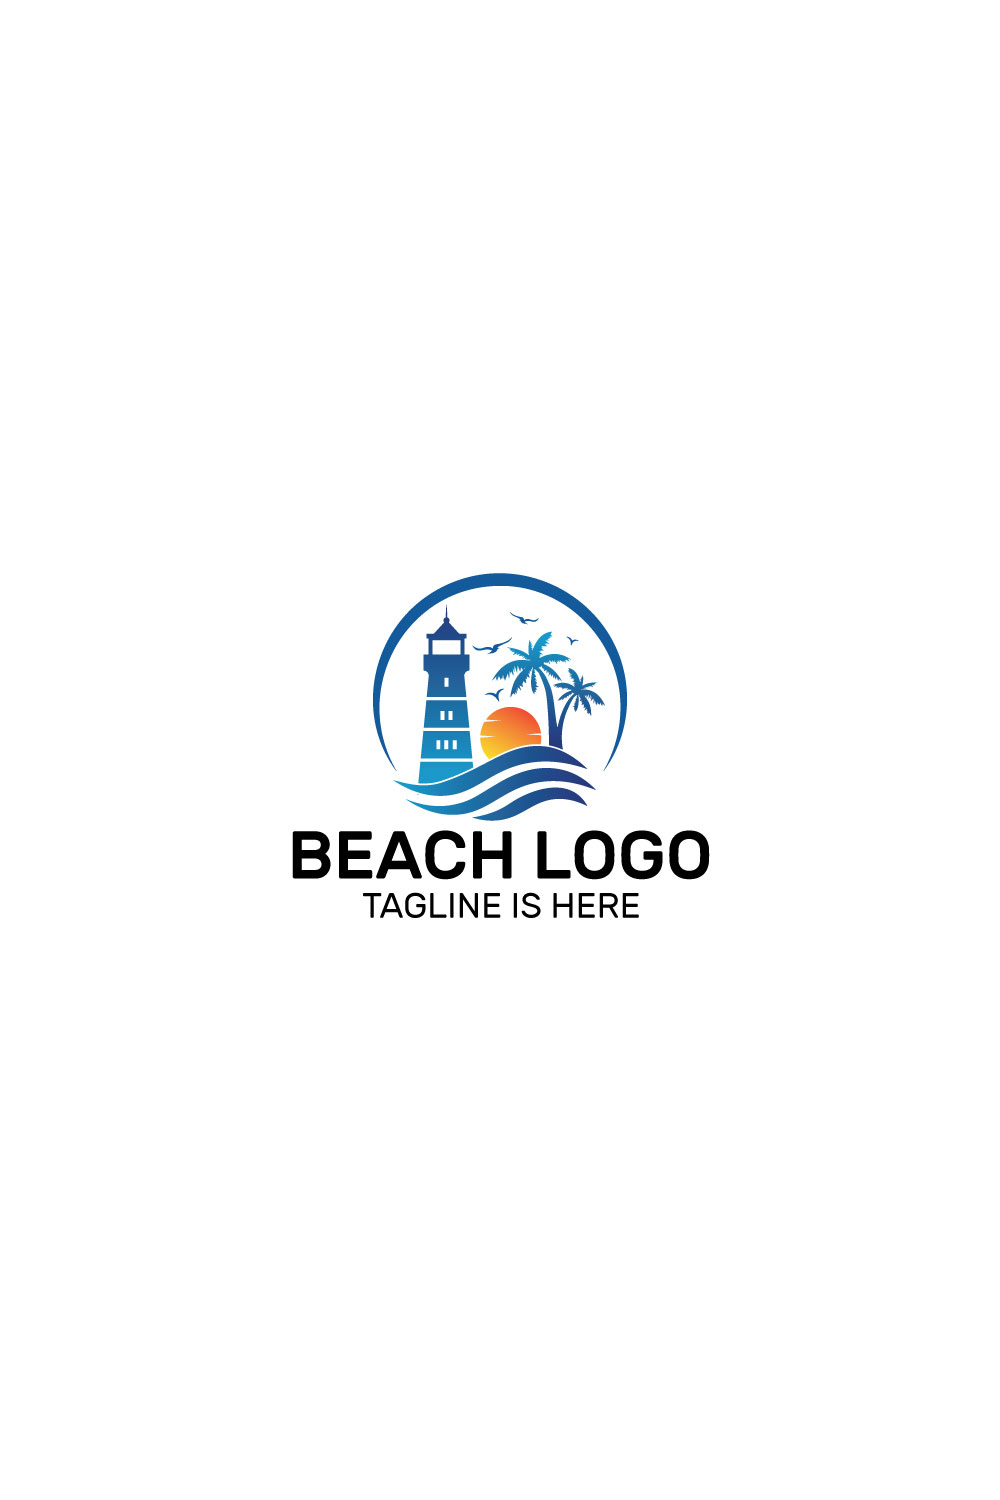 Creative lighthouse logo design illustration Vector pinterest preview image.